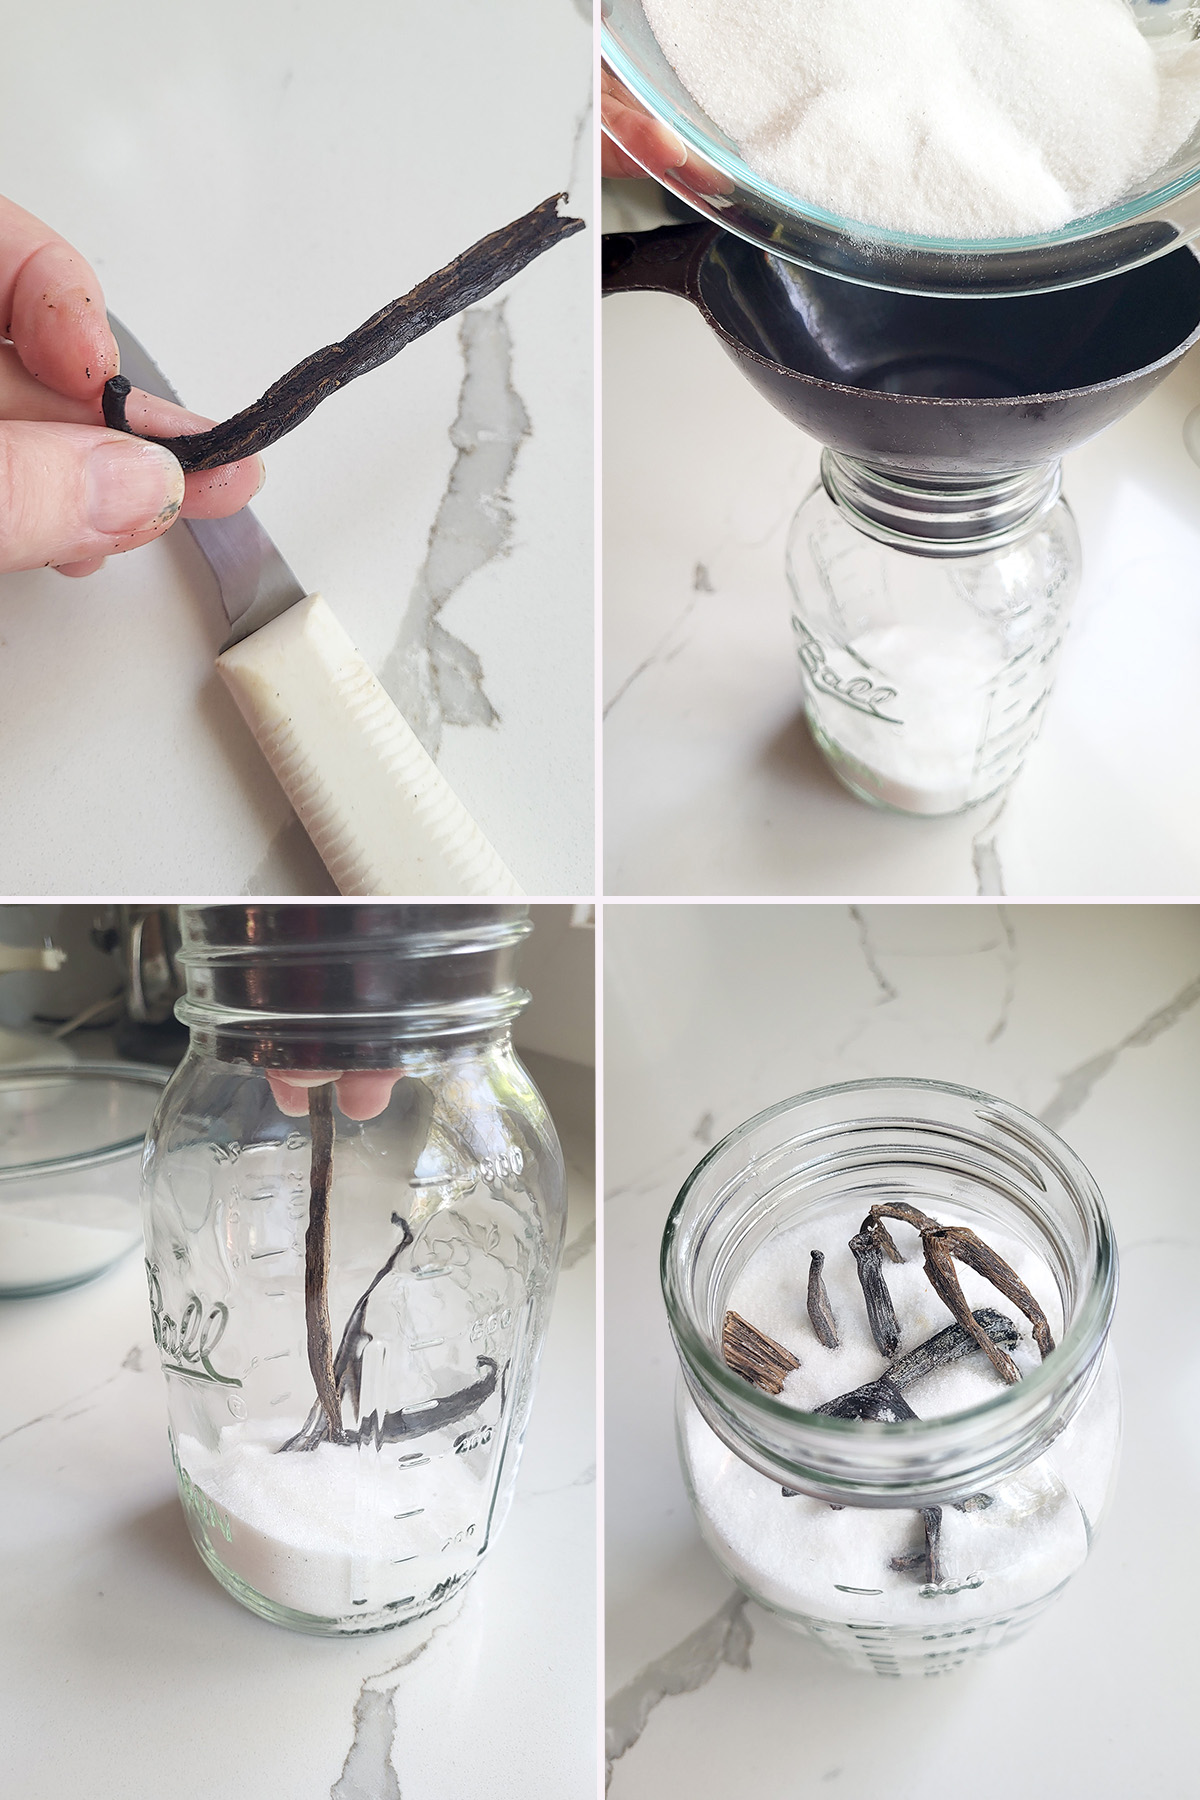 layering sugar and vanilla beans in a glass jar.